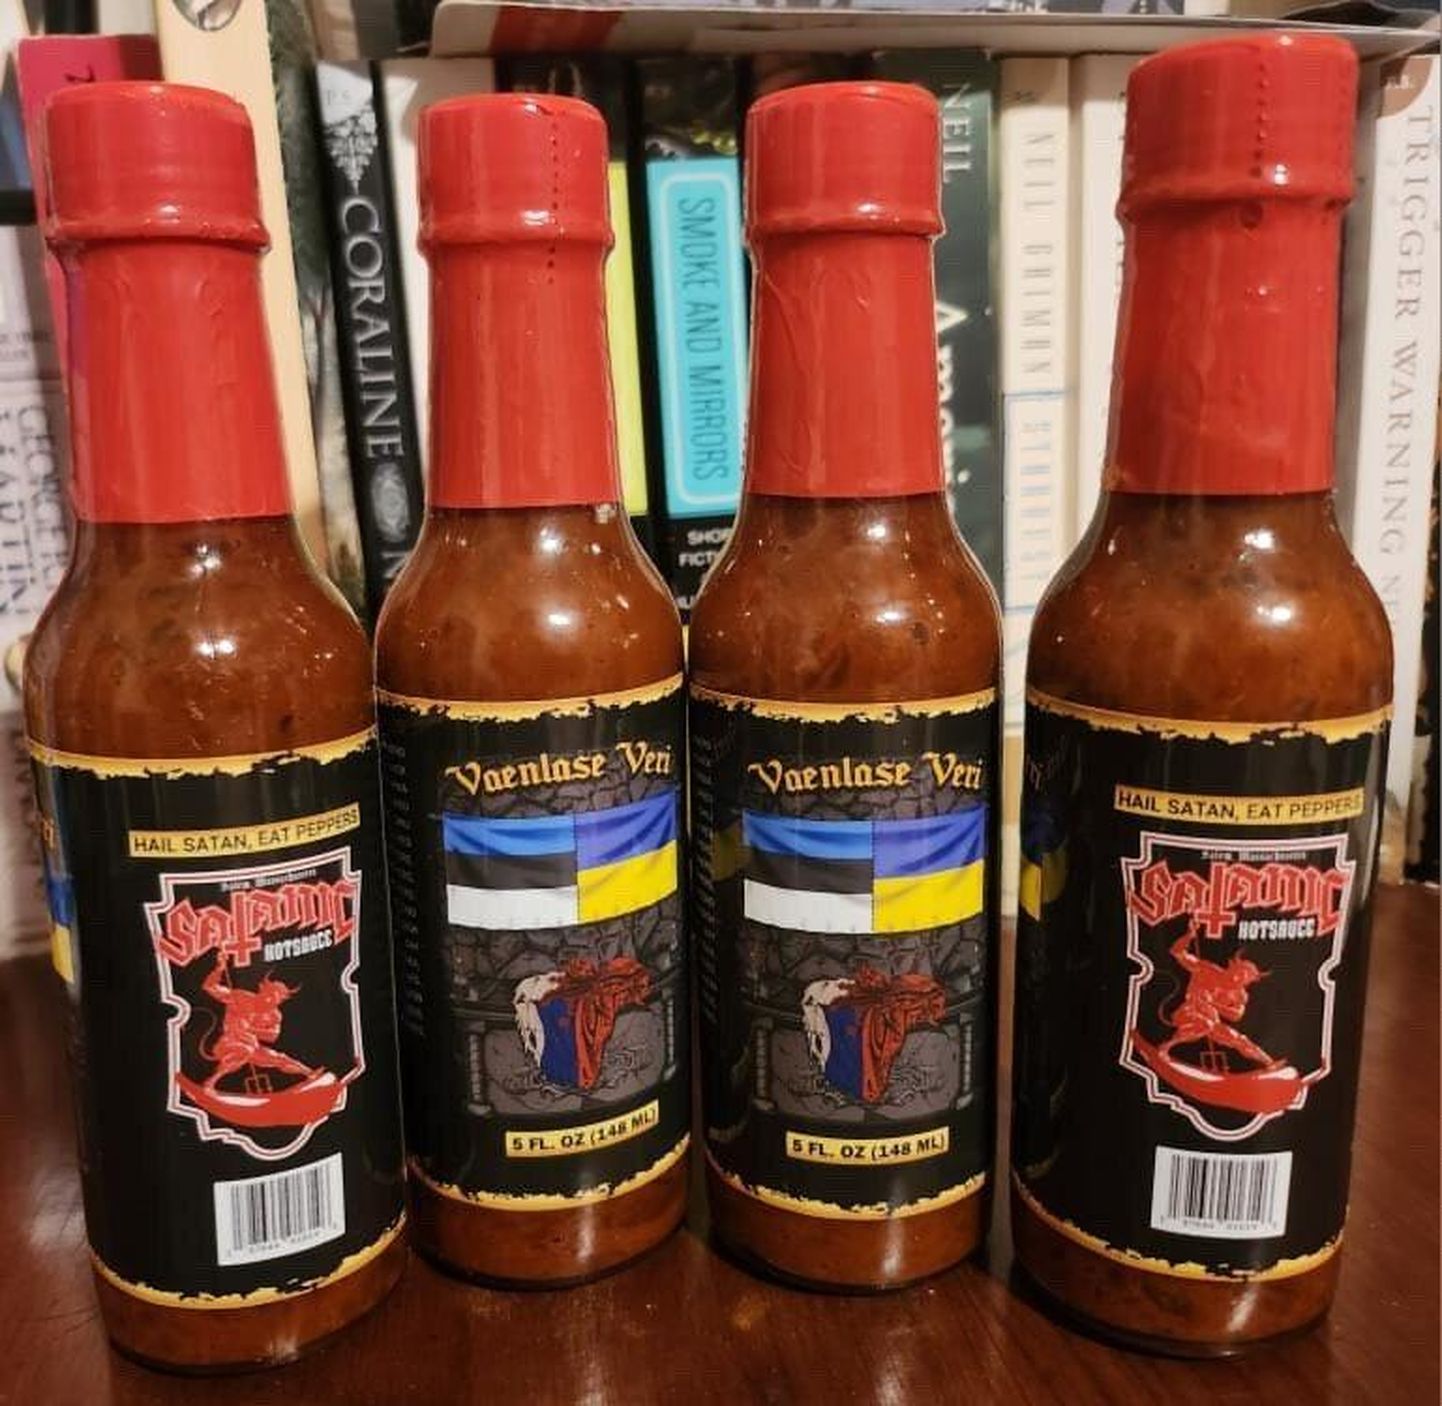 Ansambel Loits ja Satanic Hot Sauce toetavad Vaenlase Verega Ukrainat.